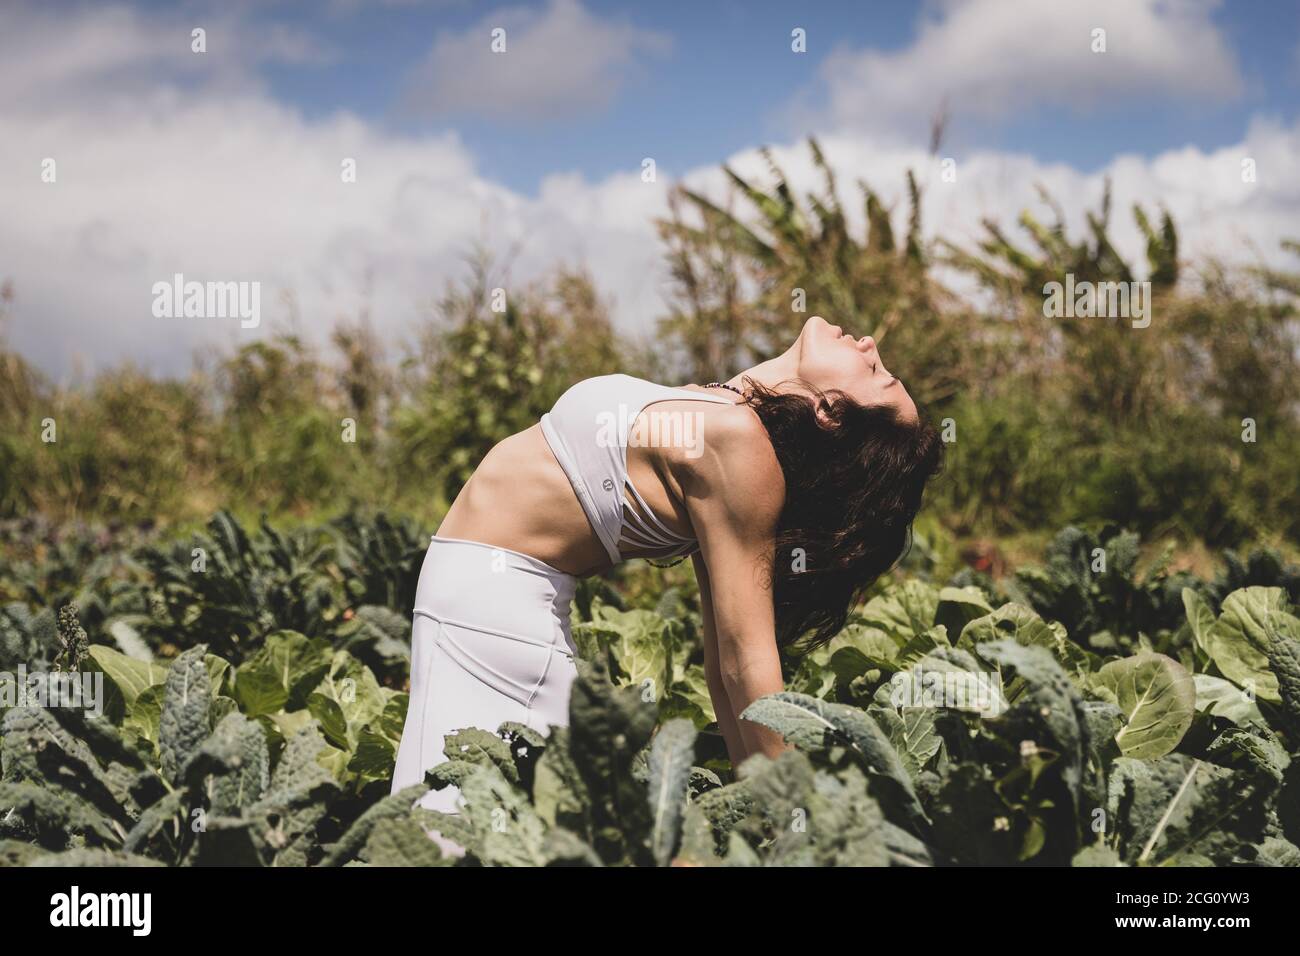 Female yogi backbends in field of vegetables Stock Photo